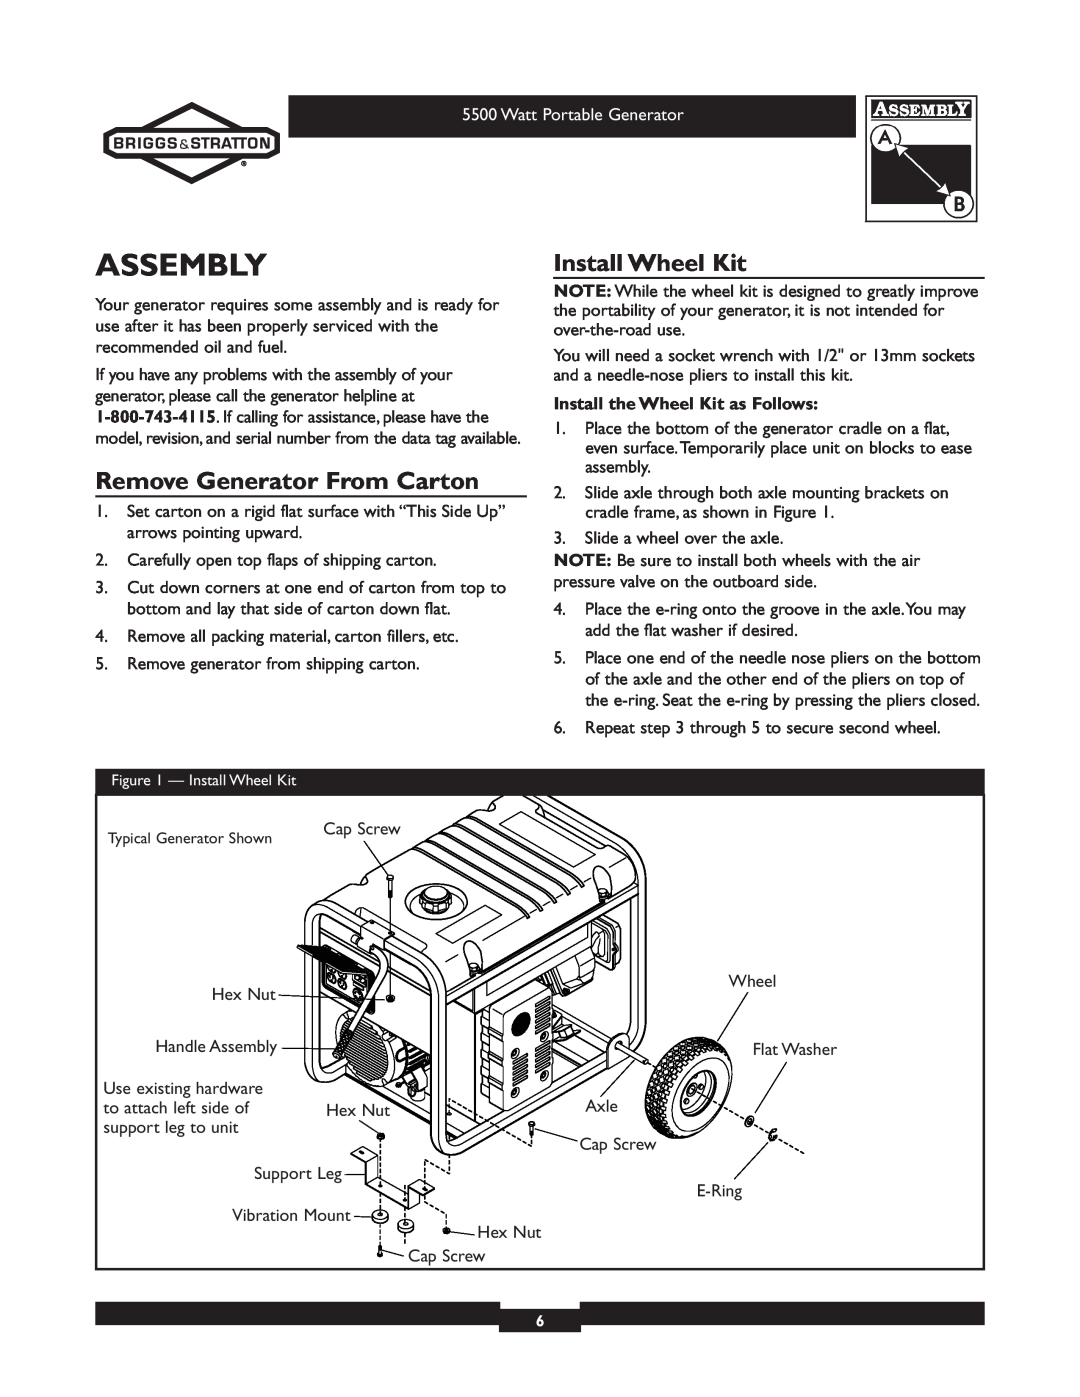 Briggs & Stratton 030206 owner manual Assembly, Remove Generator From Carton, Install Wheel Kit, Watt Portable Generator 